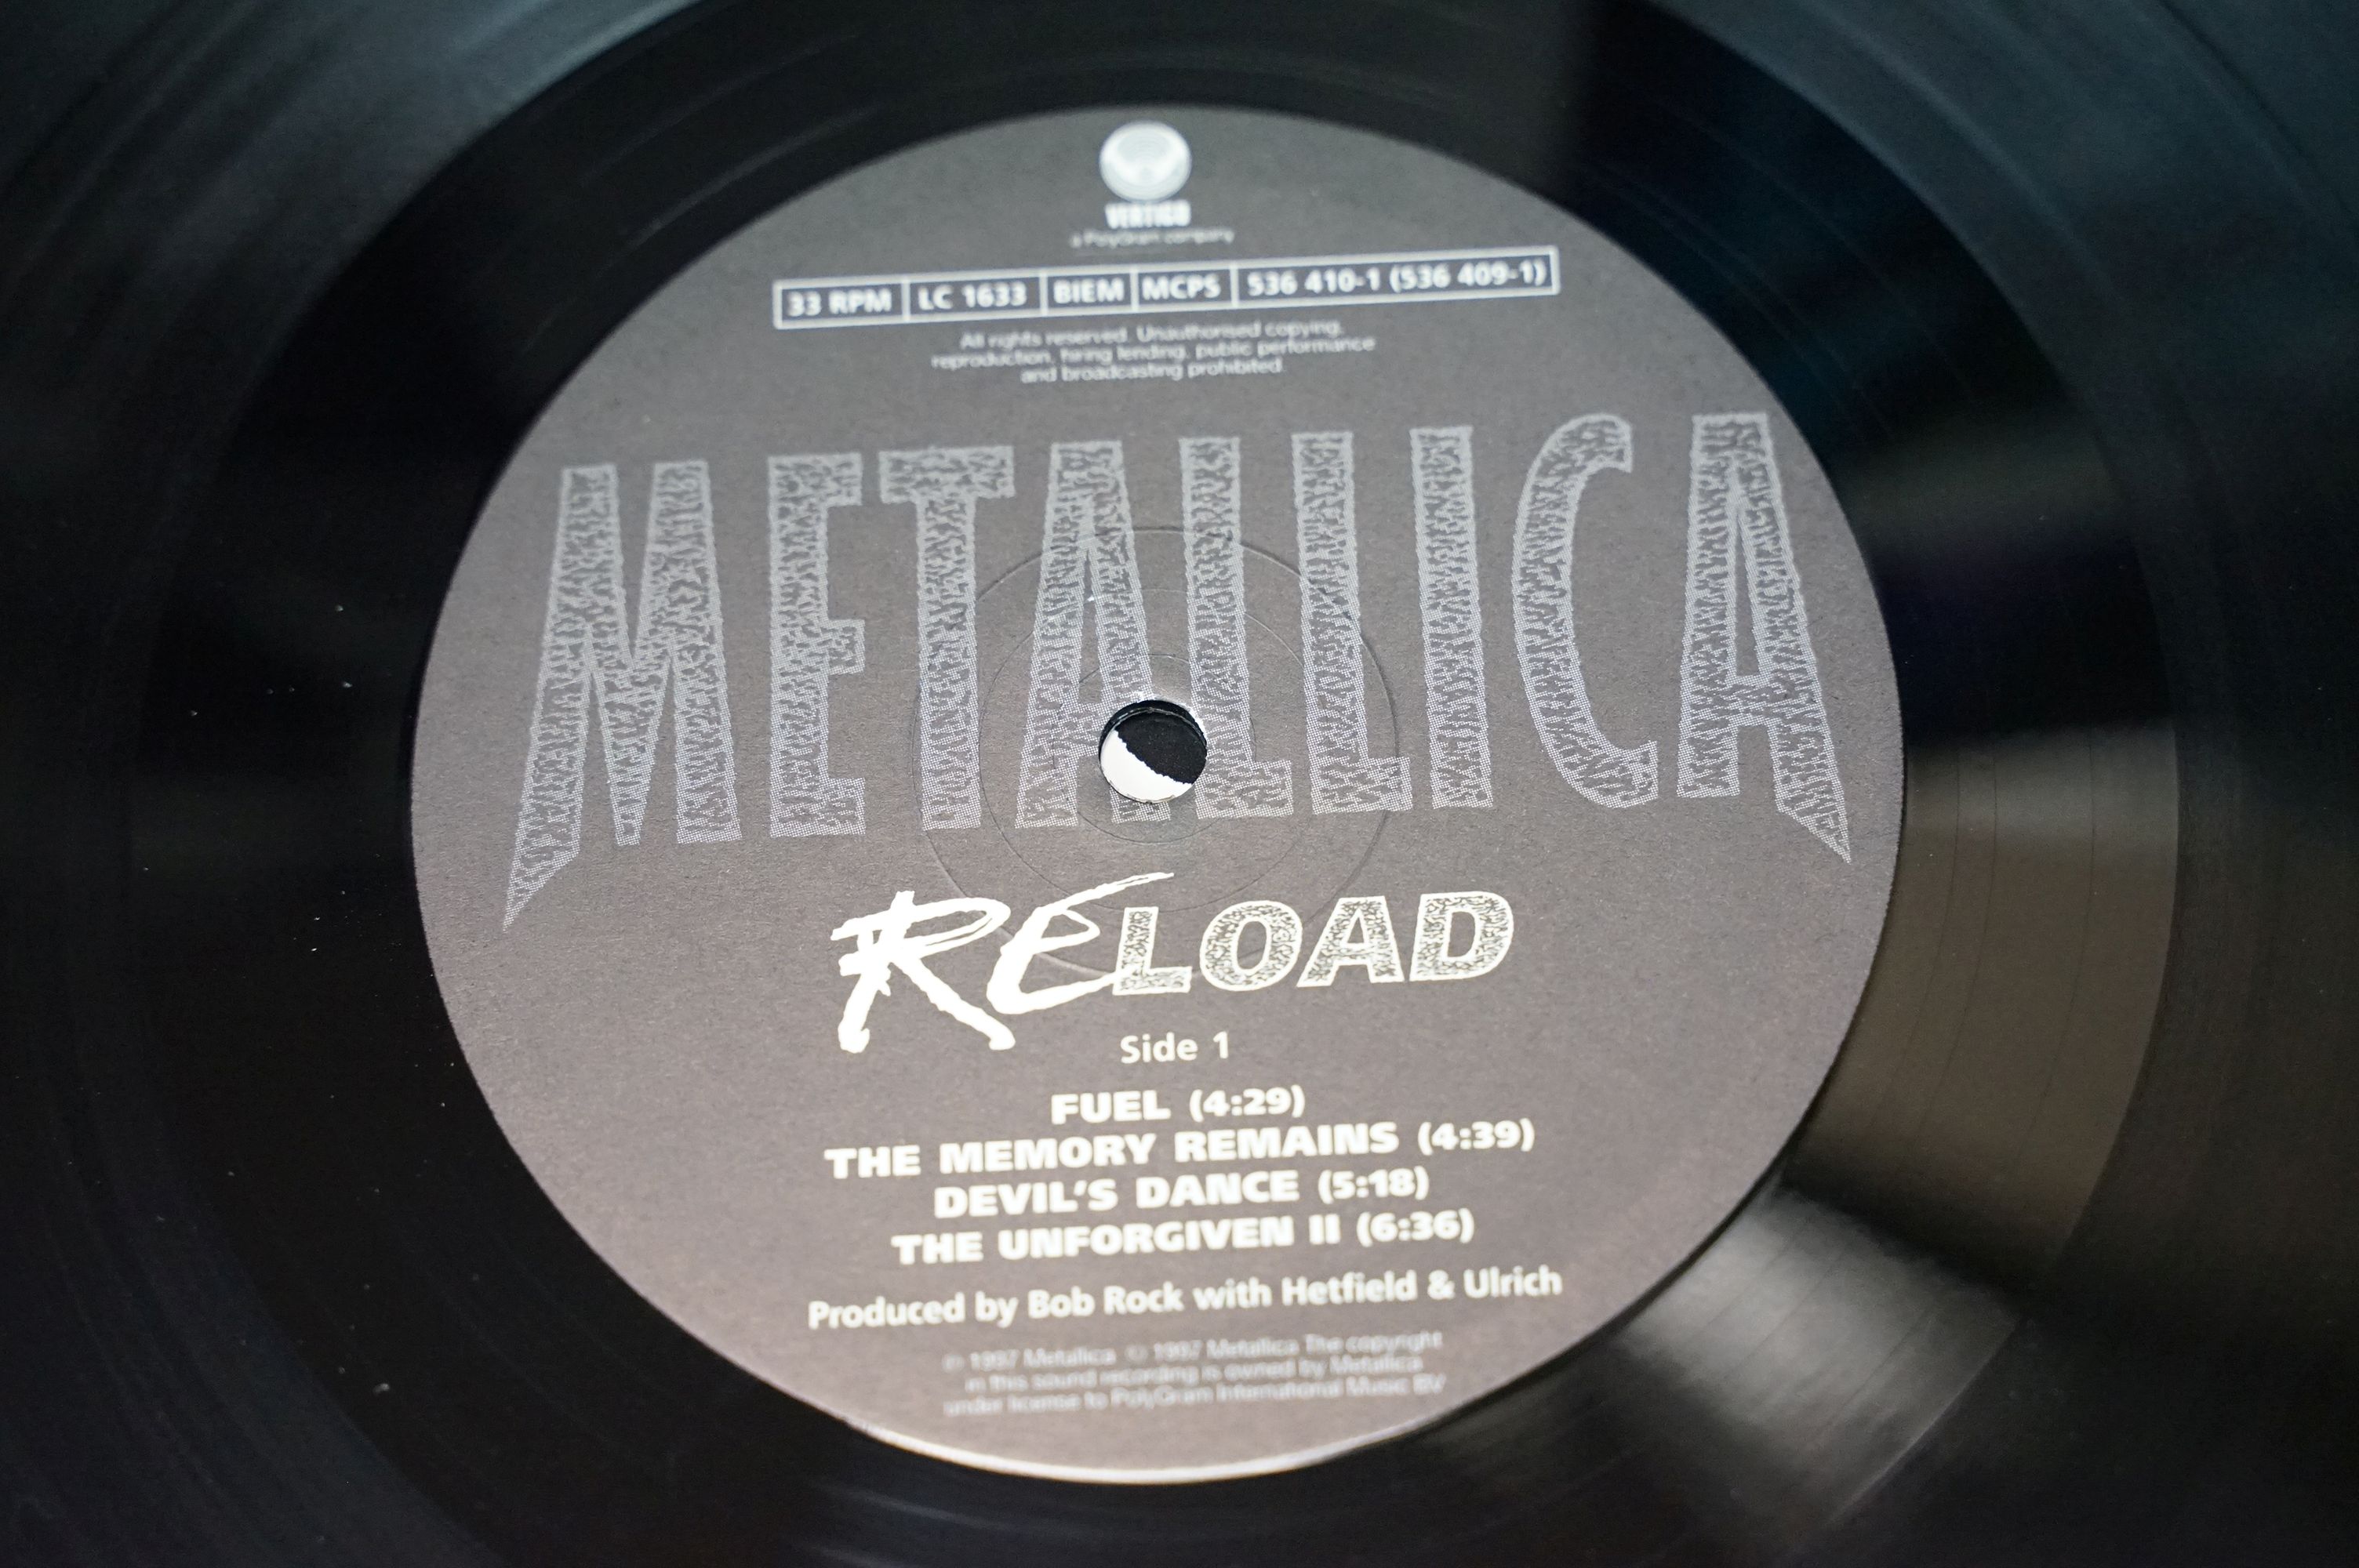 Vinyl - Metallica Reload 2LP on Vertigo 536 409-1. Sleeve Ex with original hype sticker, inners - Image 4 of 5